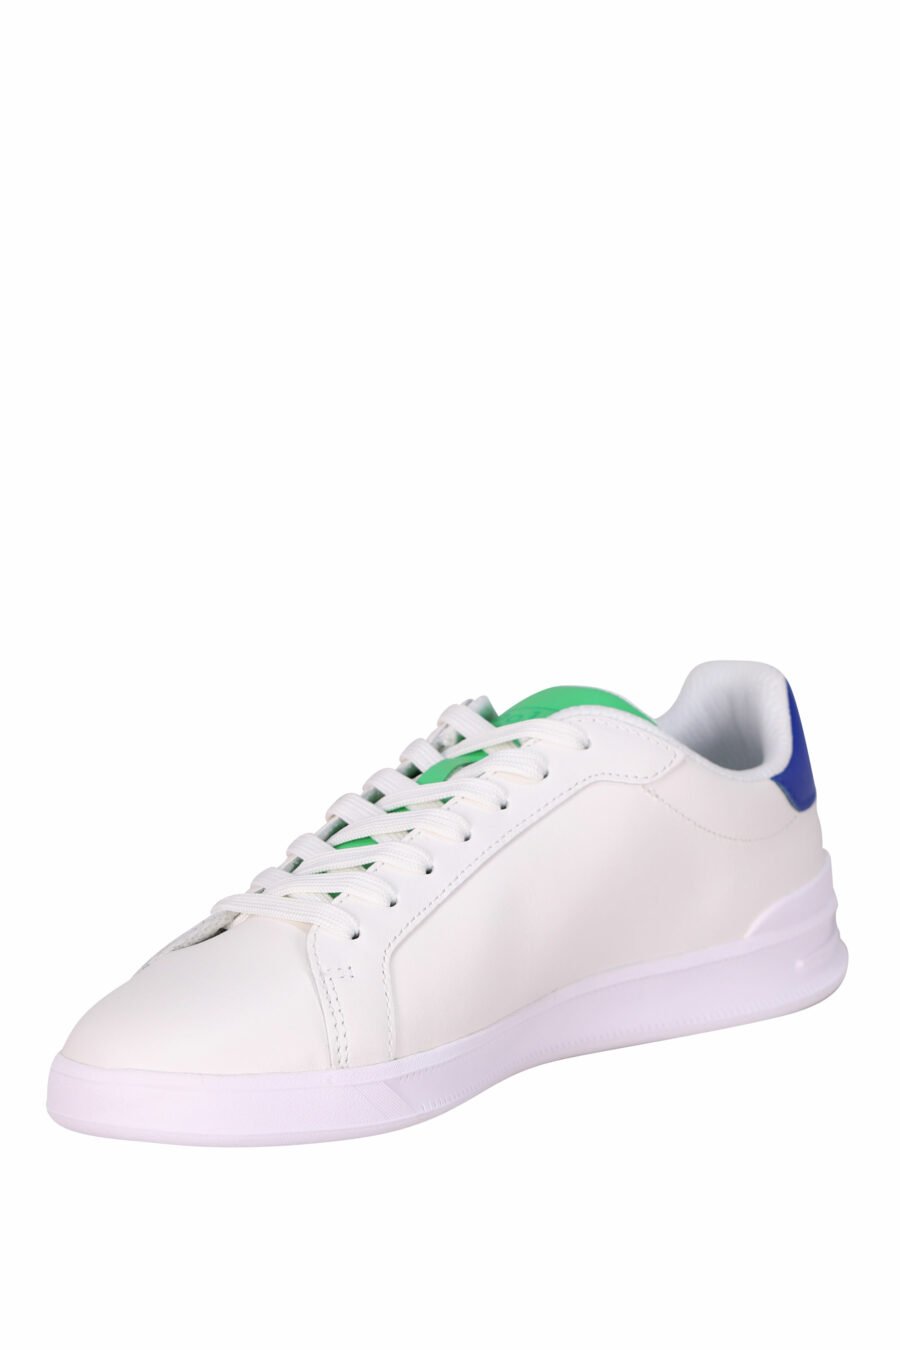 Zapatillas blancas con detalle verde y azul con minilogo "polo" - 3616535905740 3